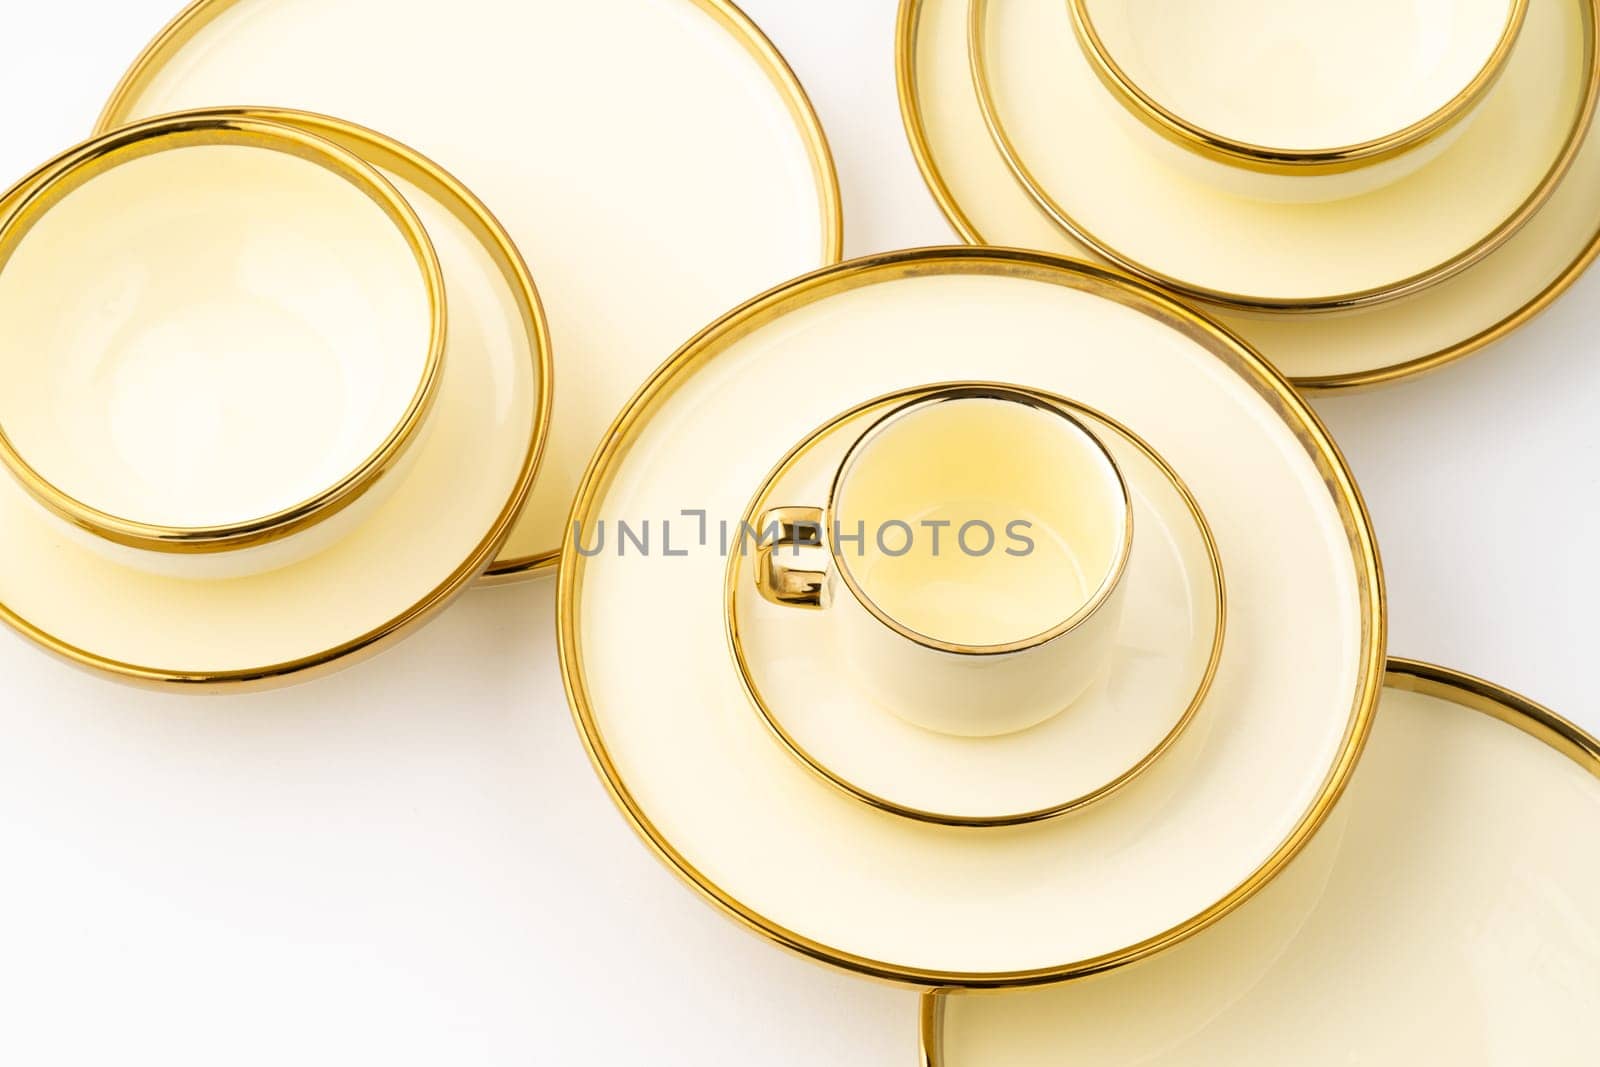 A set of golden luxury ceramic kitchen utensils on a white background